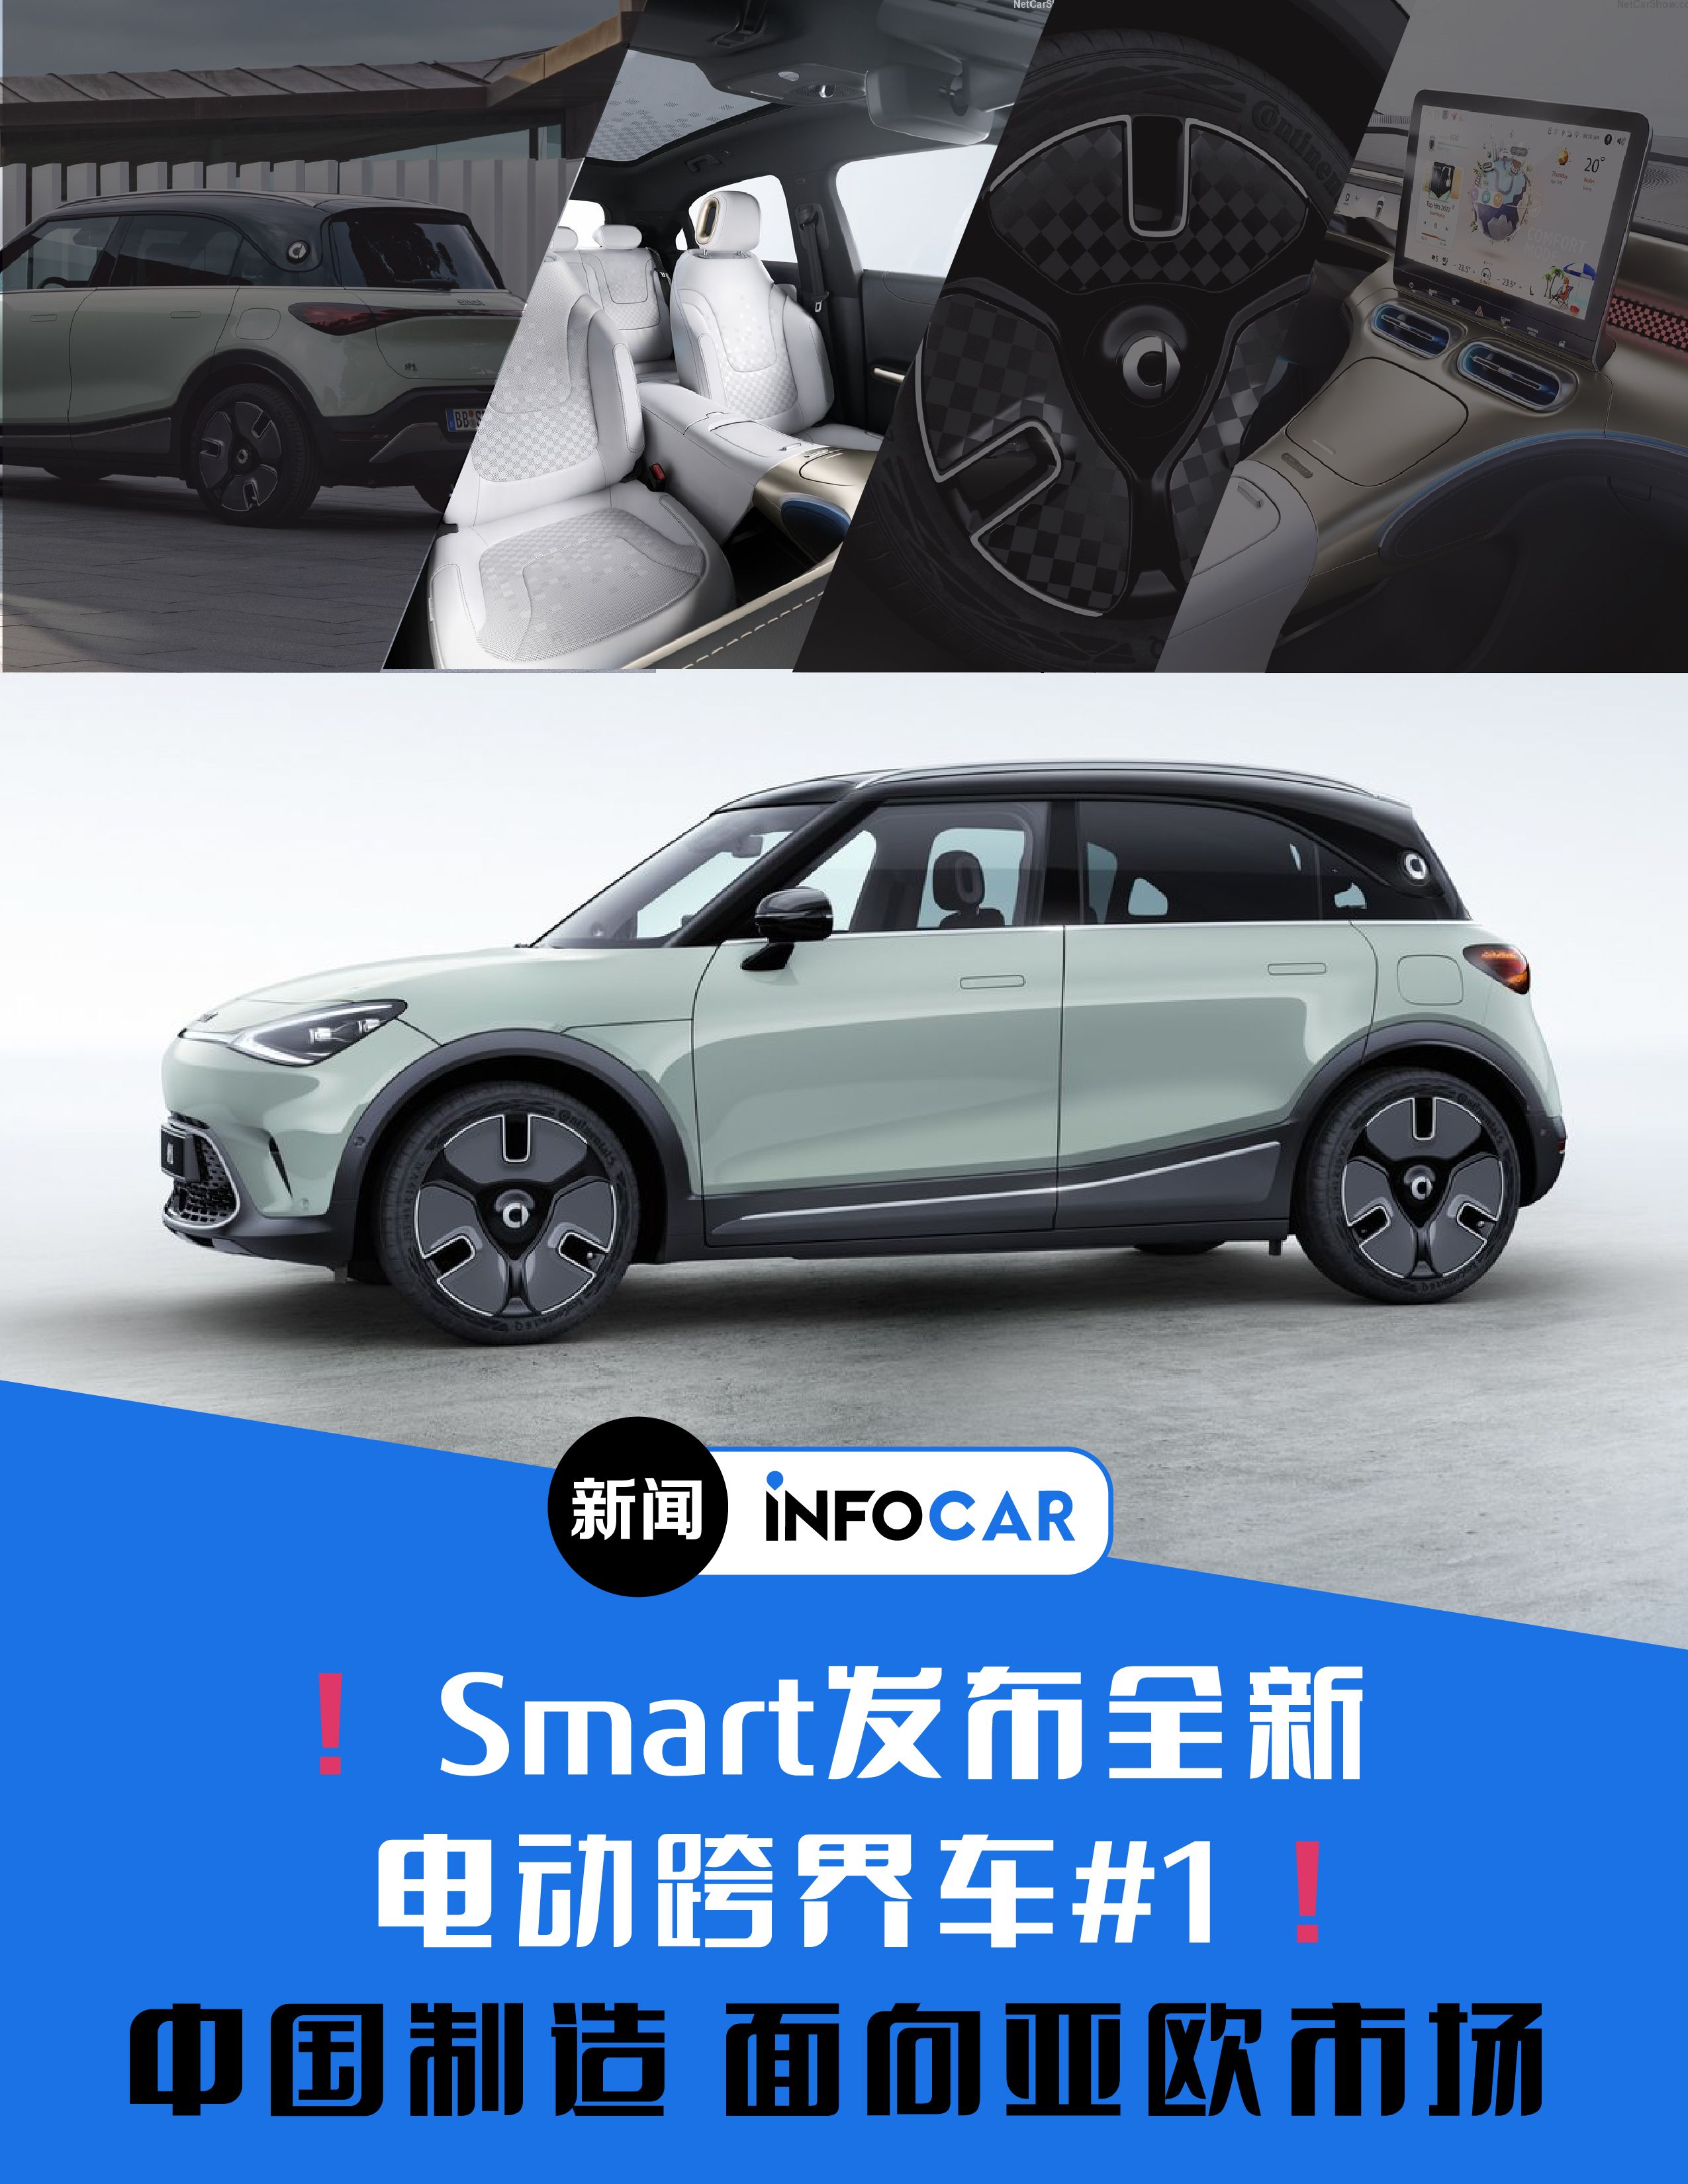 INFOCAR车闻：Smart发布全新电动跨界车#1，对标Mini Countryman